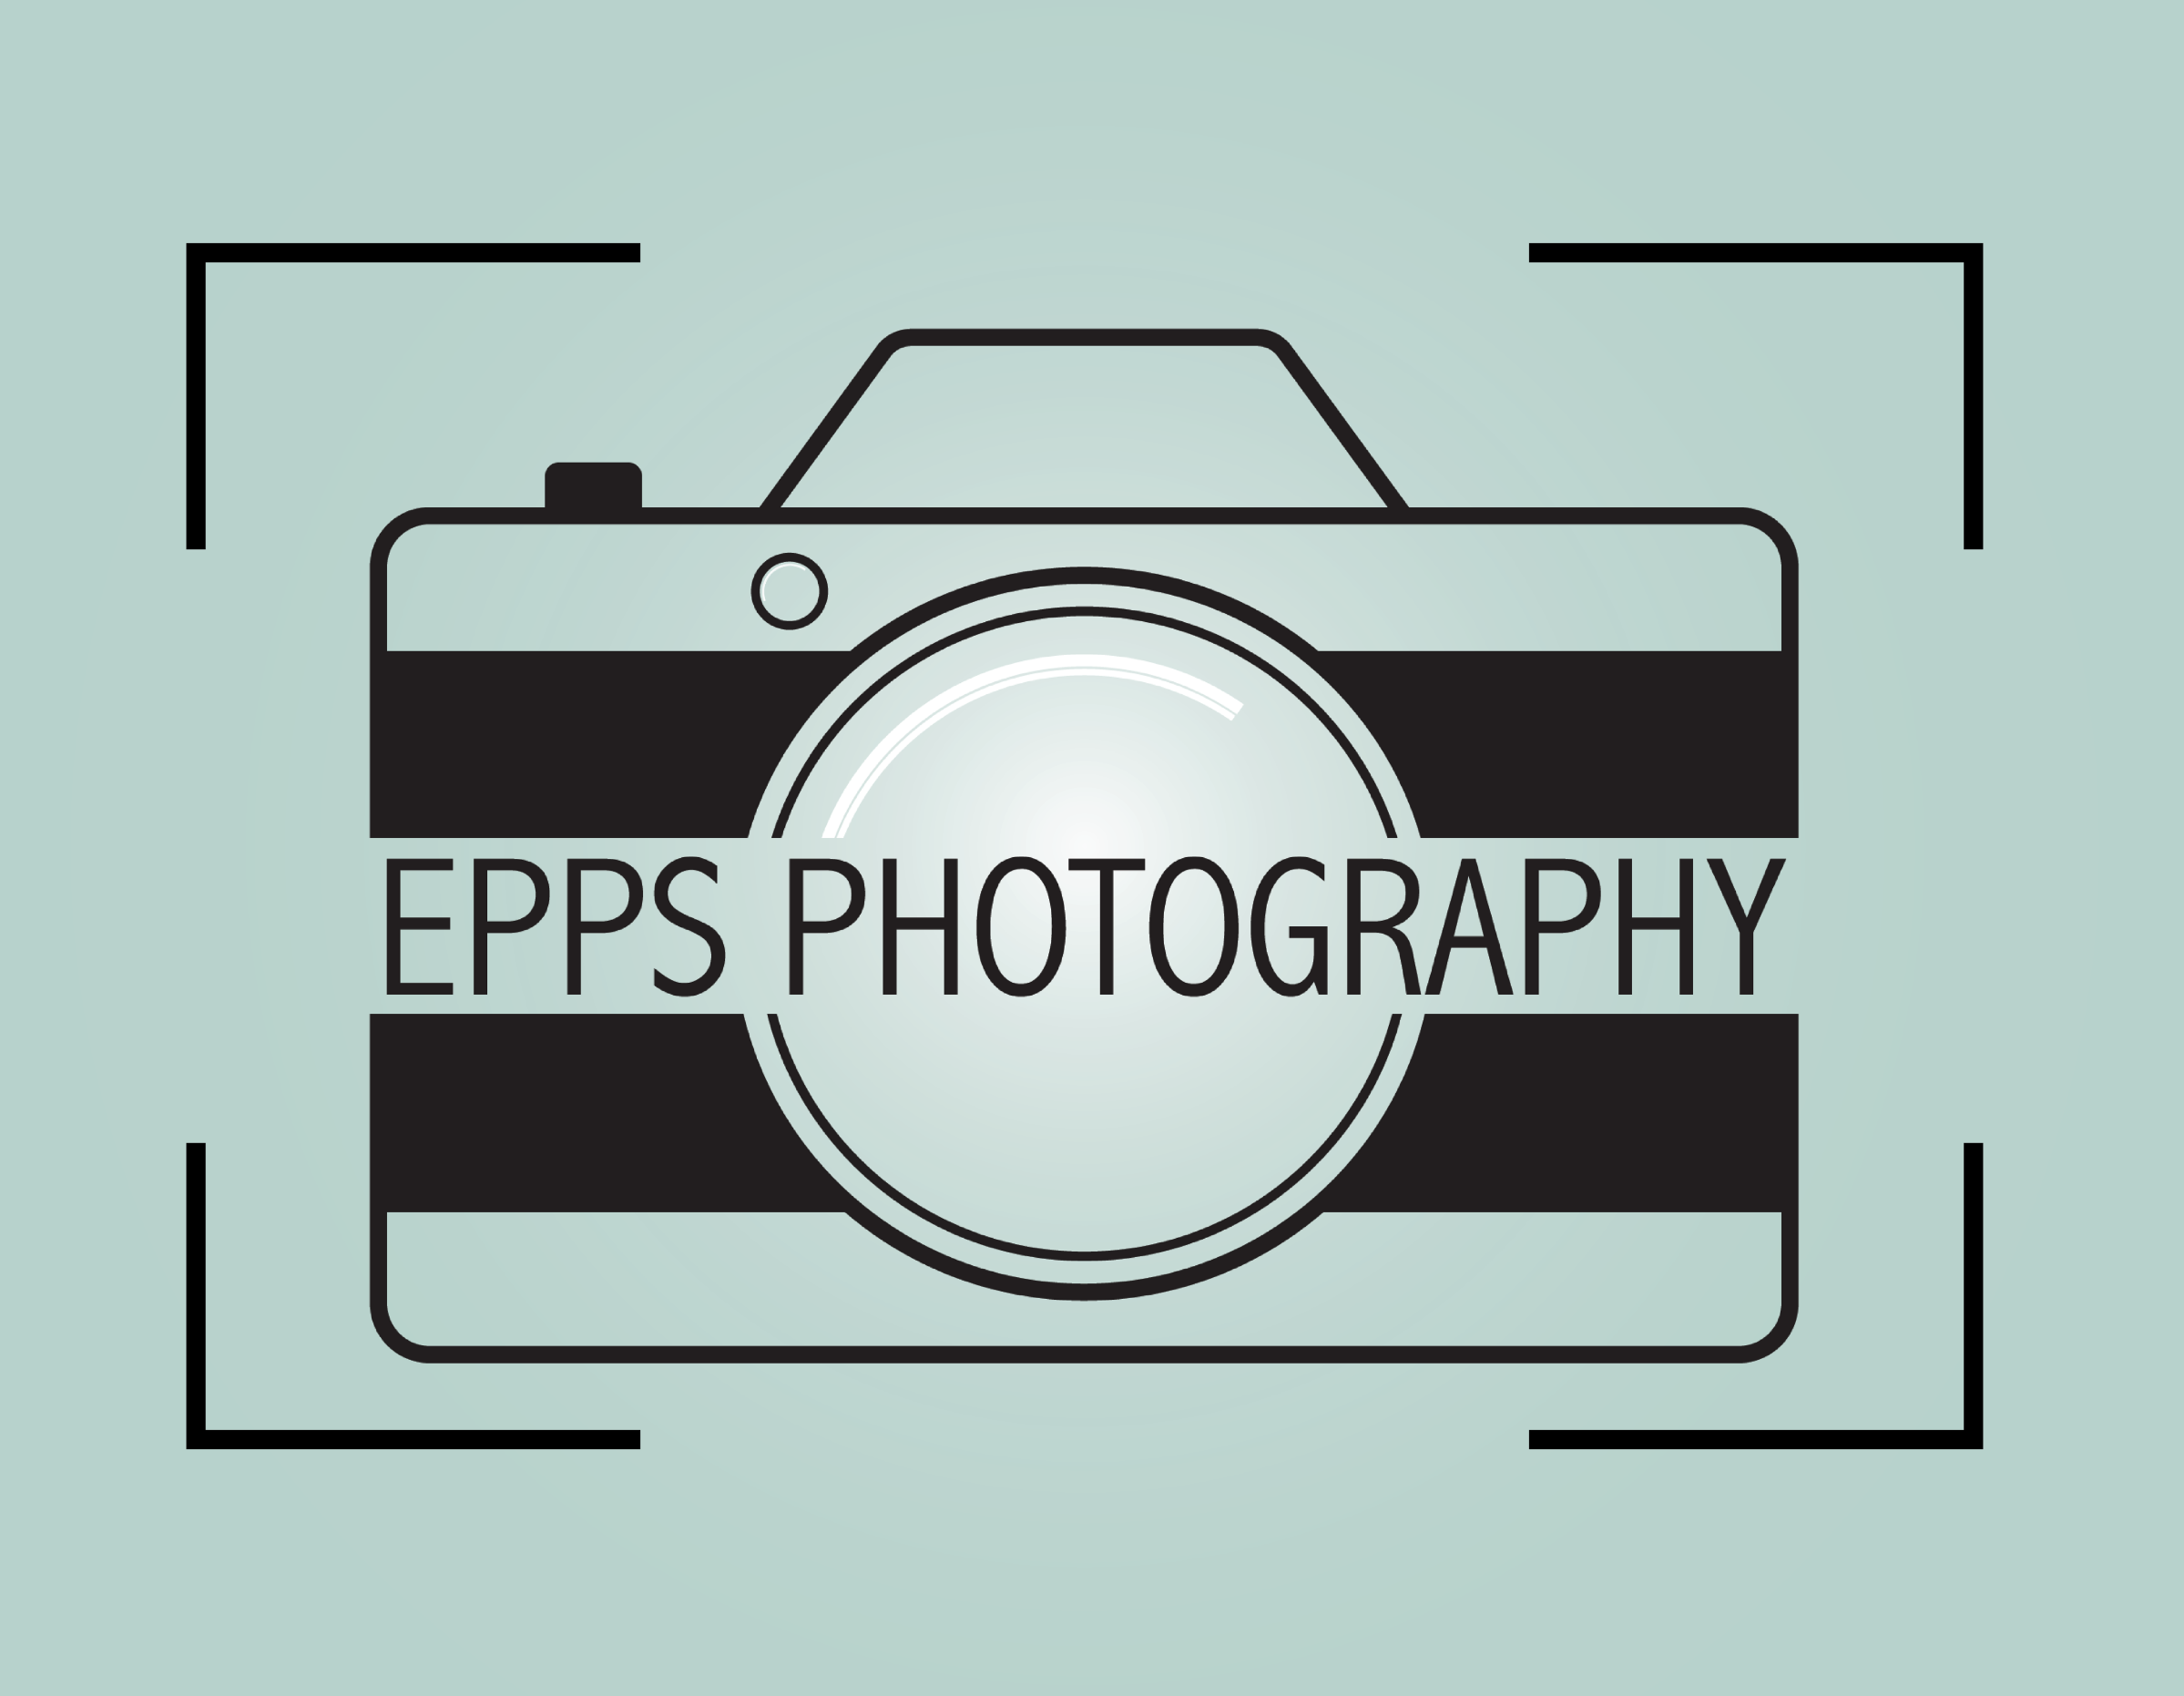 Epps Photography